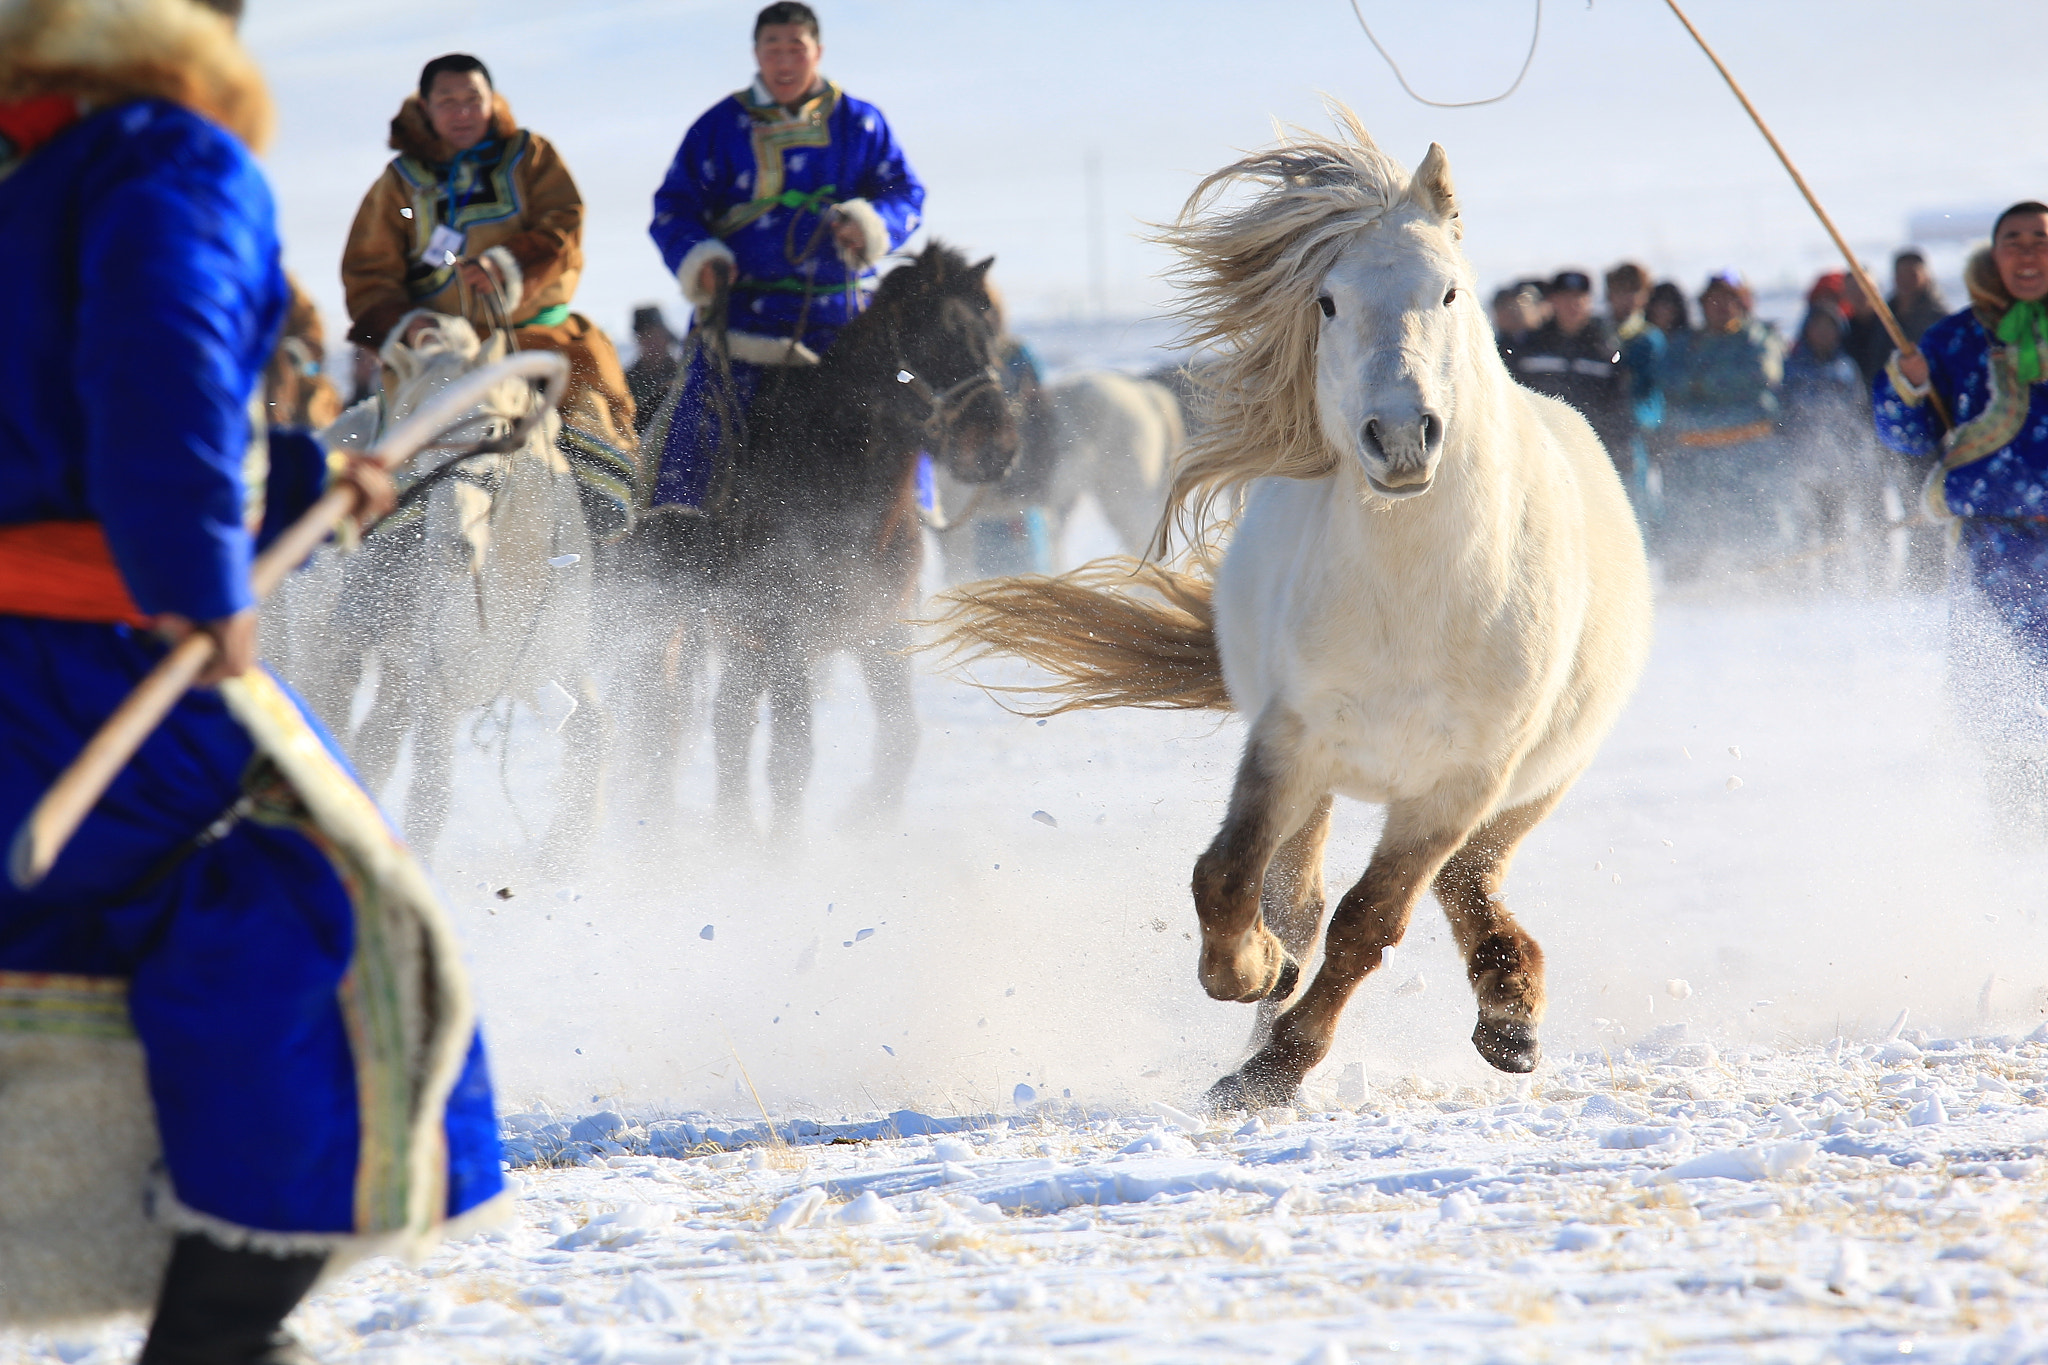 Catching Horse, Naadam